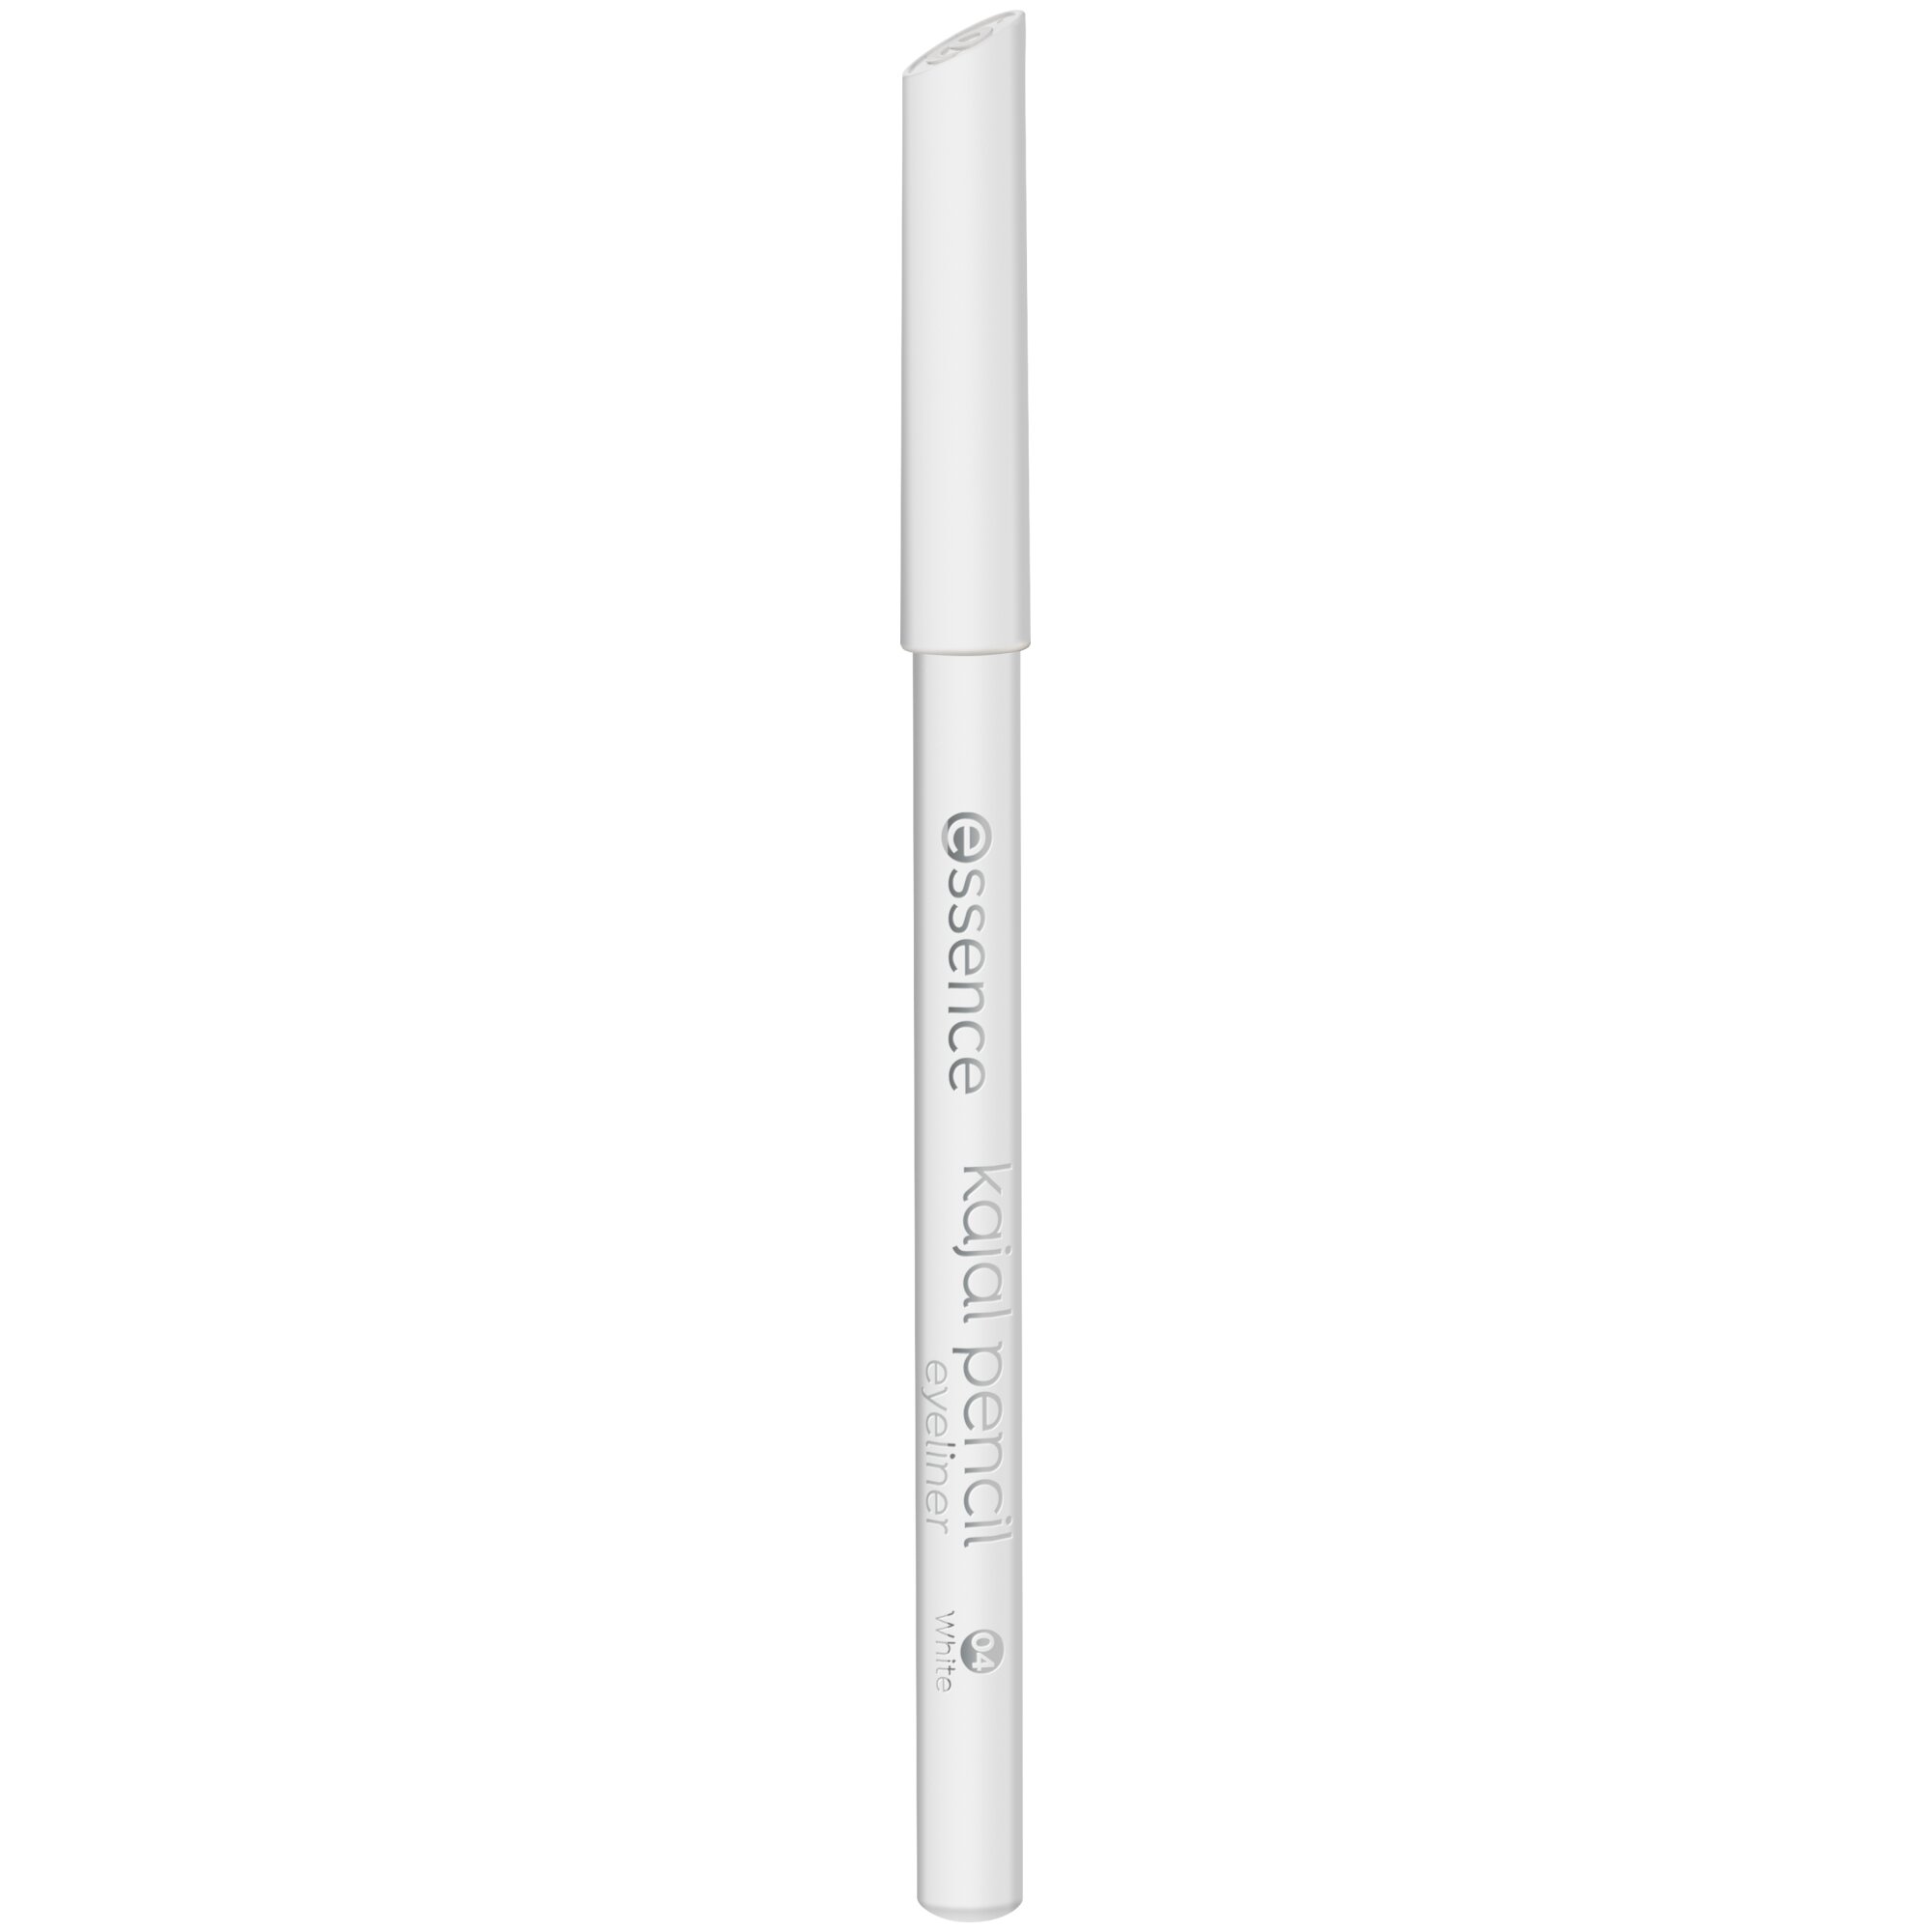 Creion pentru ochi Kajal Pencil, 04 - white, 1 g, Essence